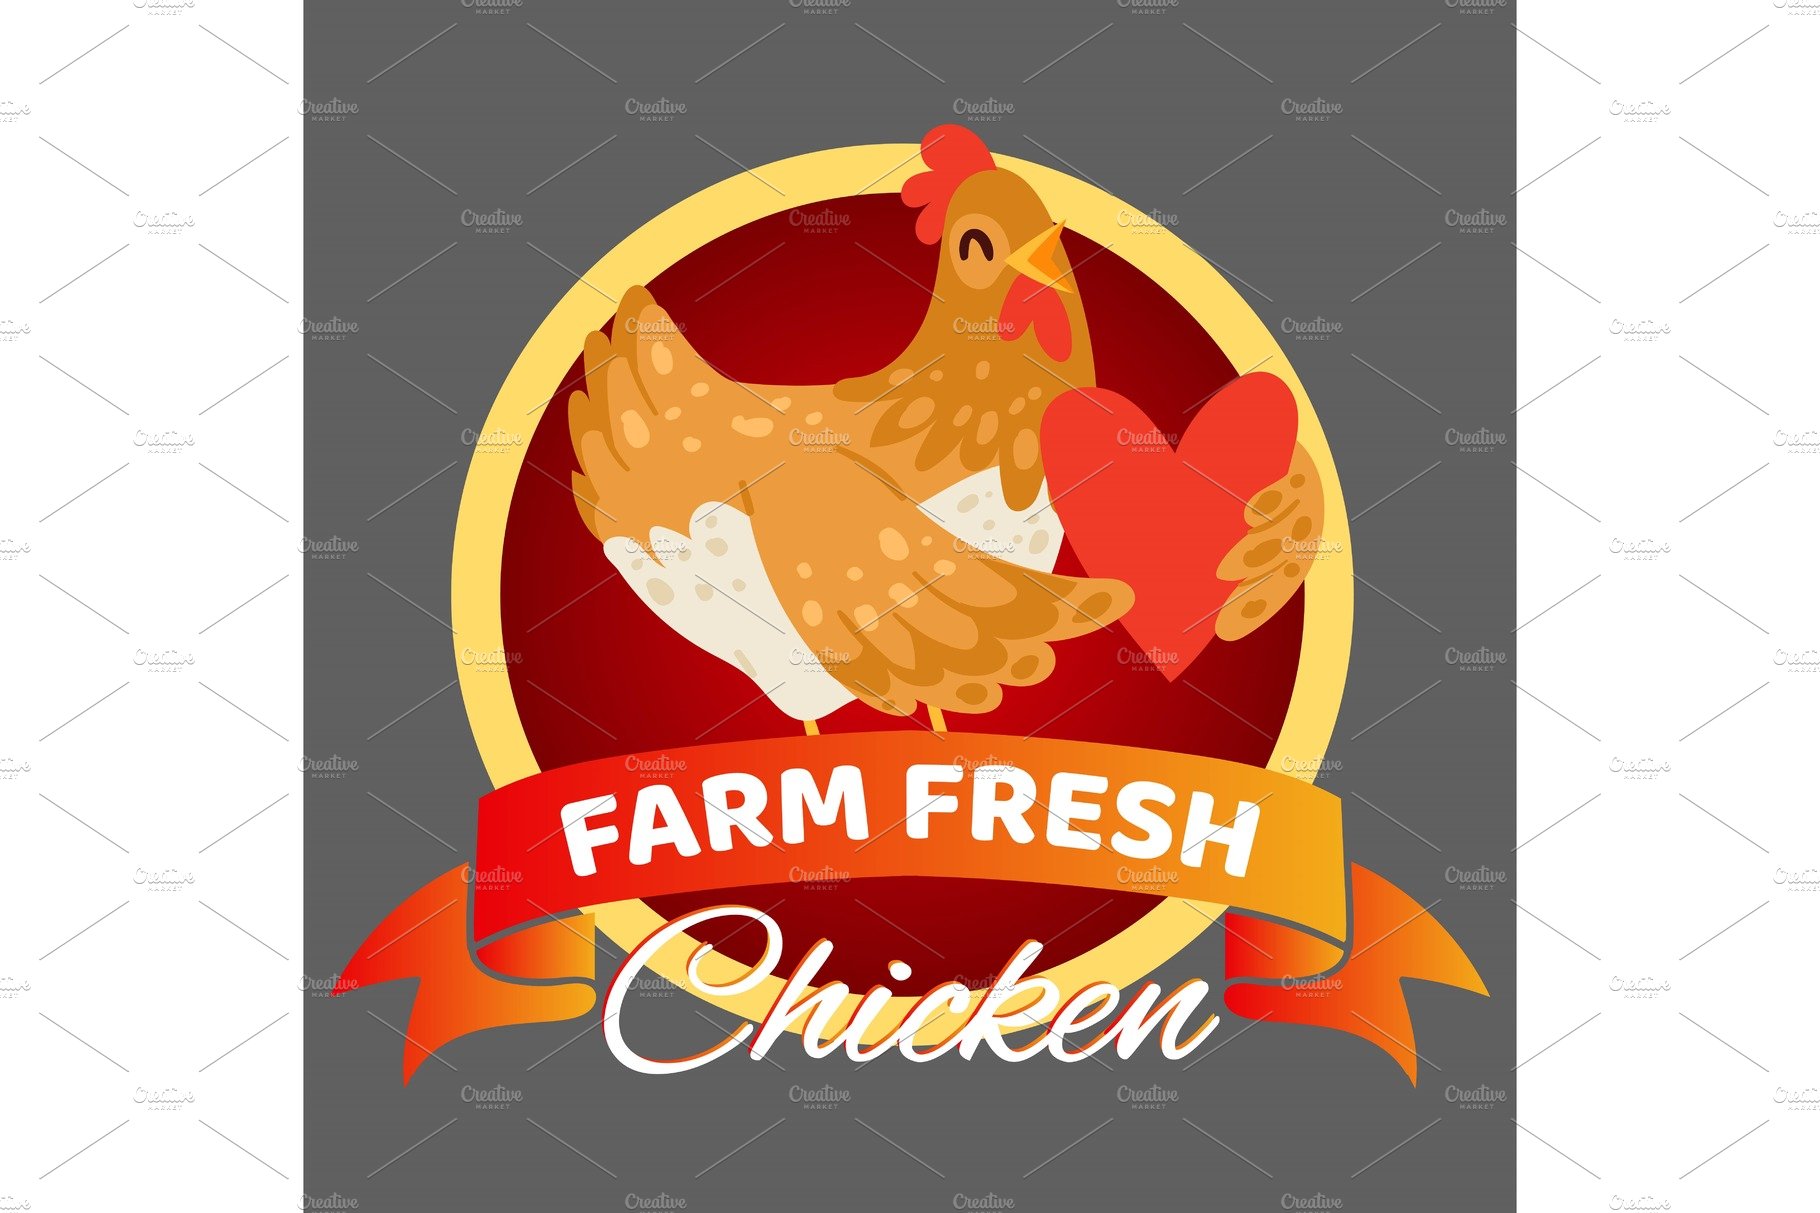 Farm fresh chicken banner vector cover image.